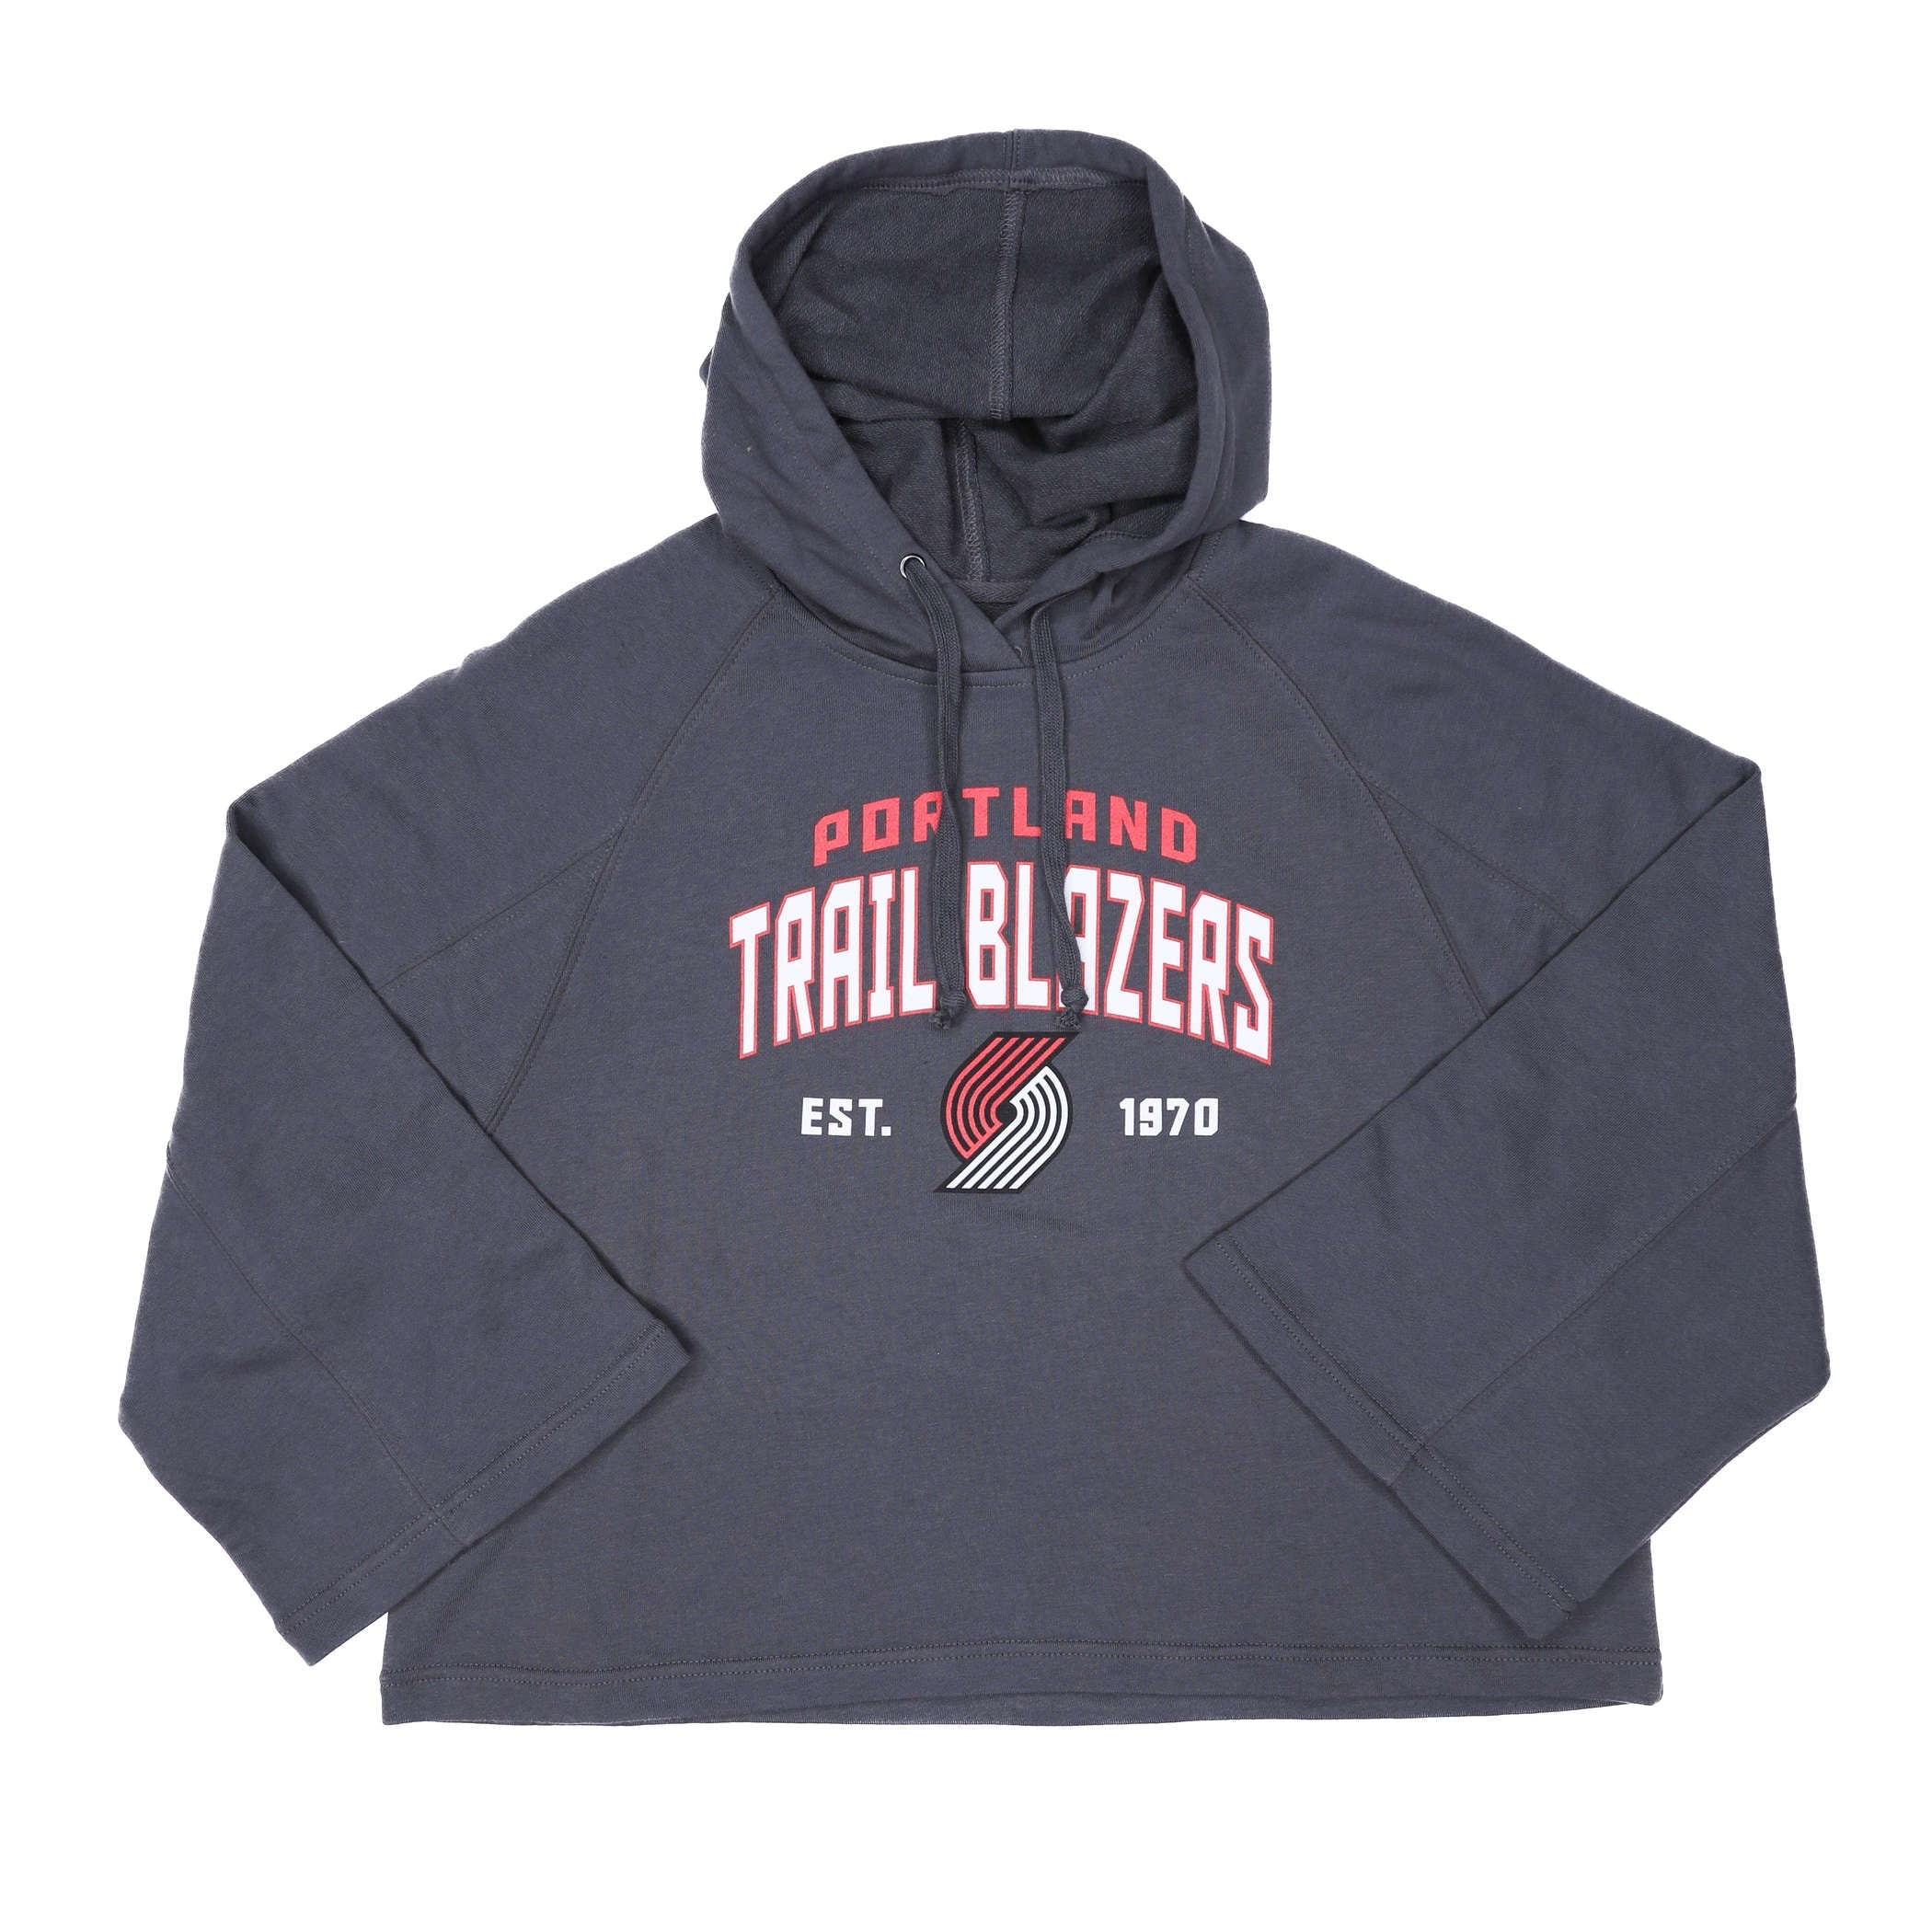 portland trail blazers women's hoodie